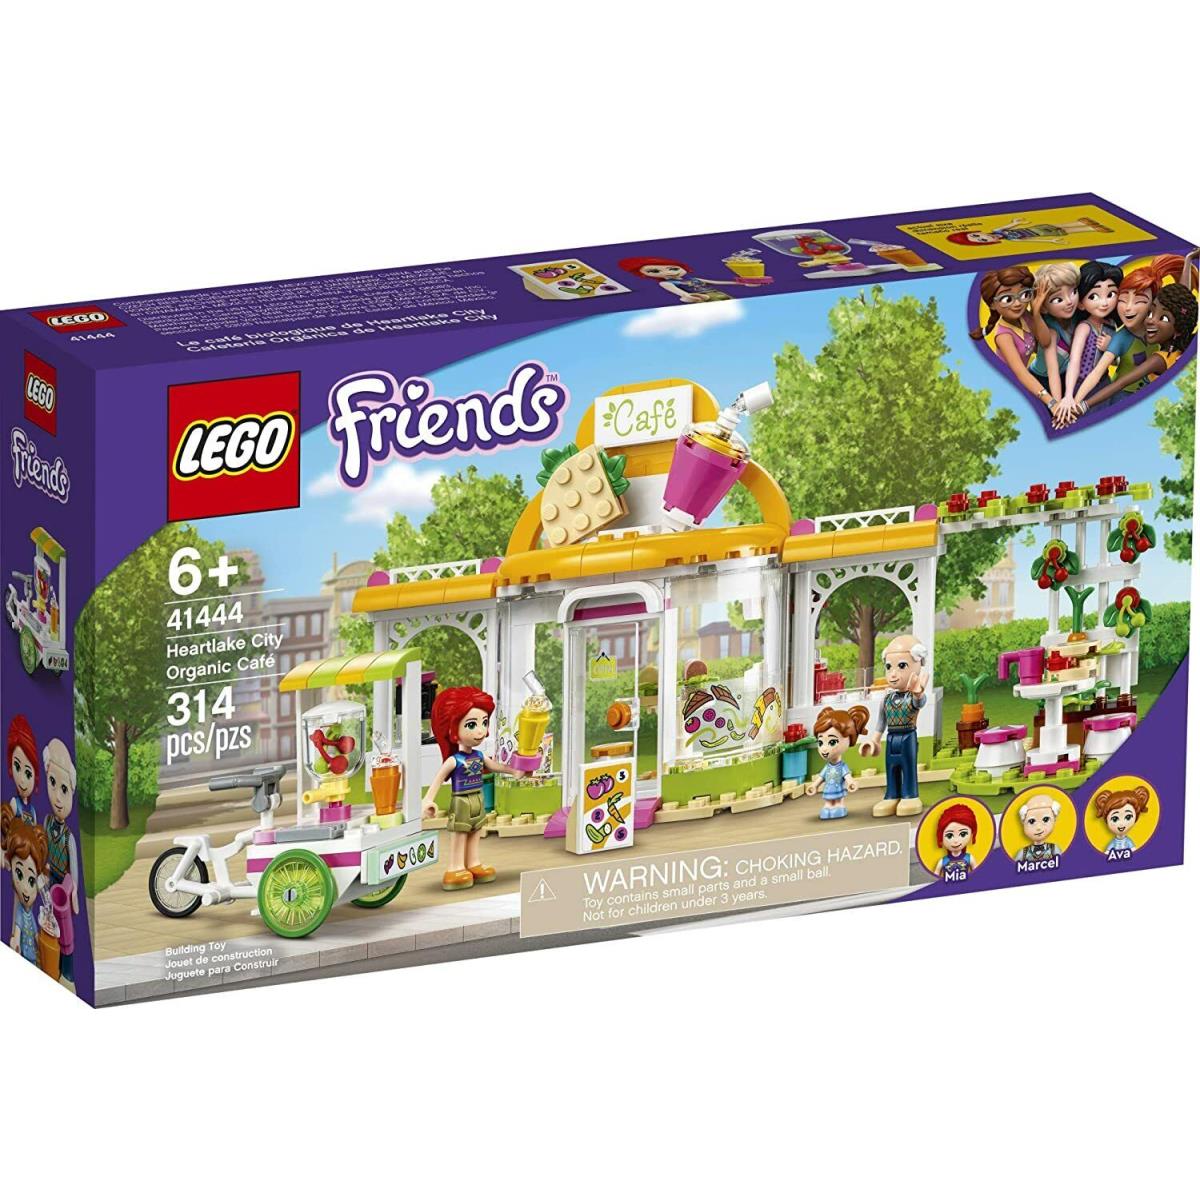 Lego Friends Heartlake City Organic Cafe 41444 Building Kit Playset